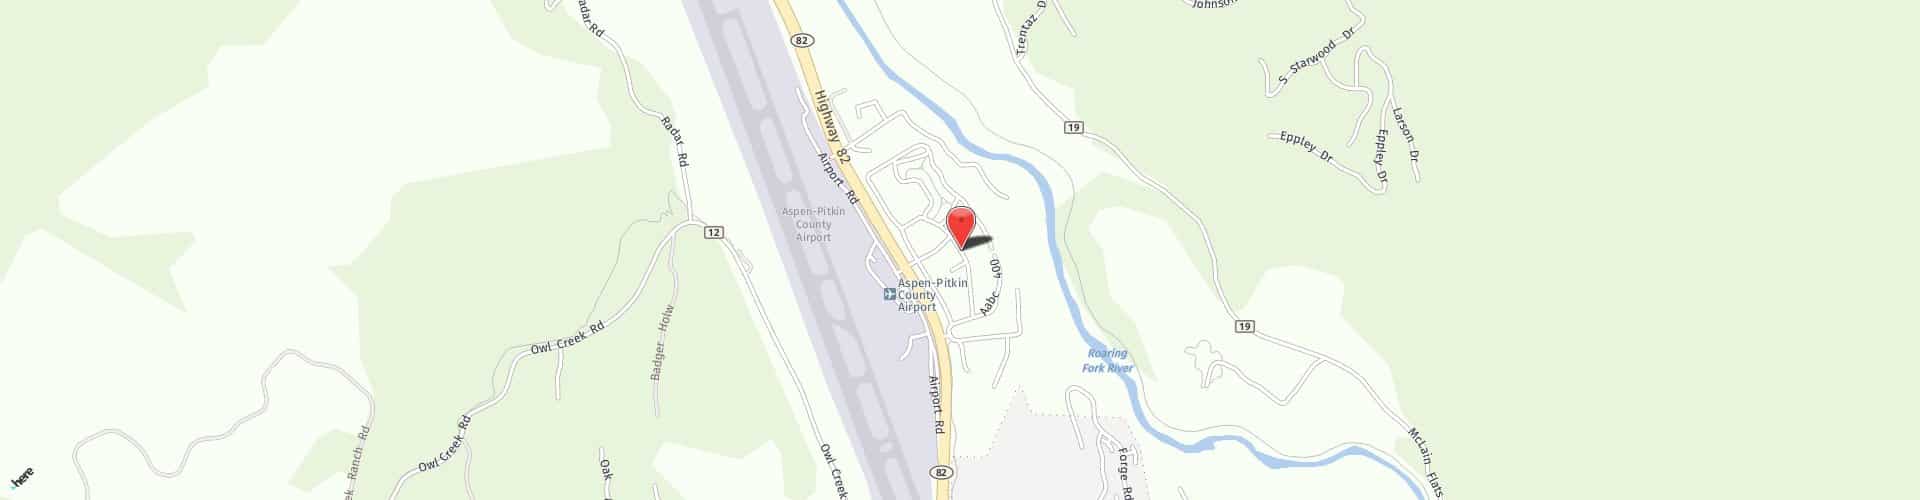 Location Map: 312 Aspen Airport Business Center Aspen, CO 81611